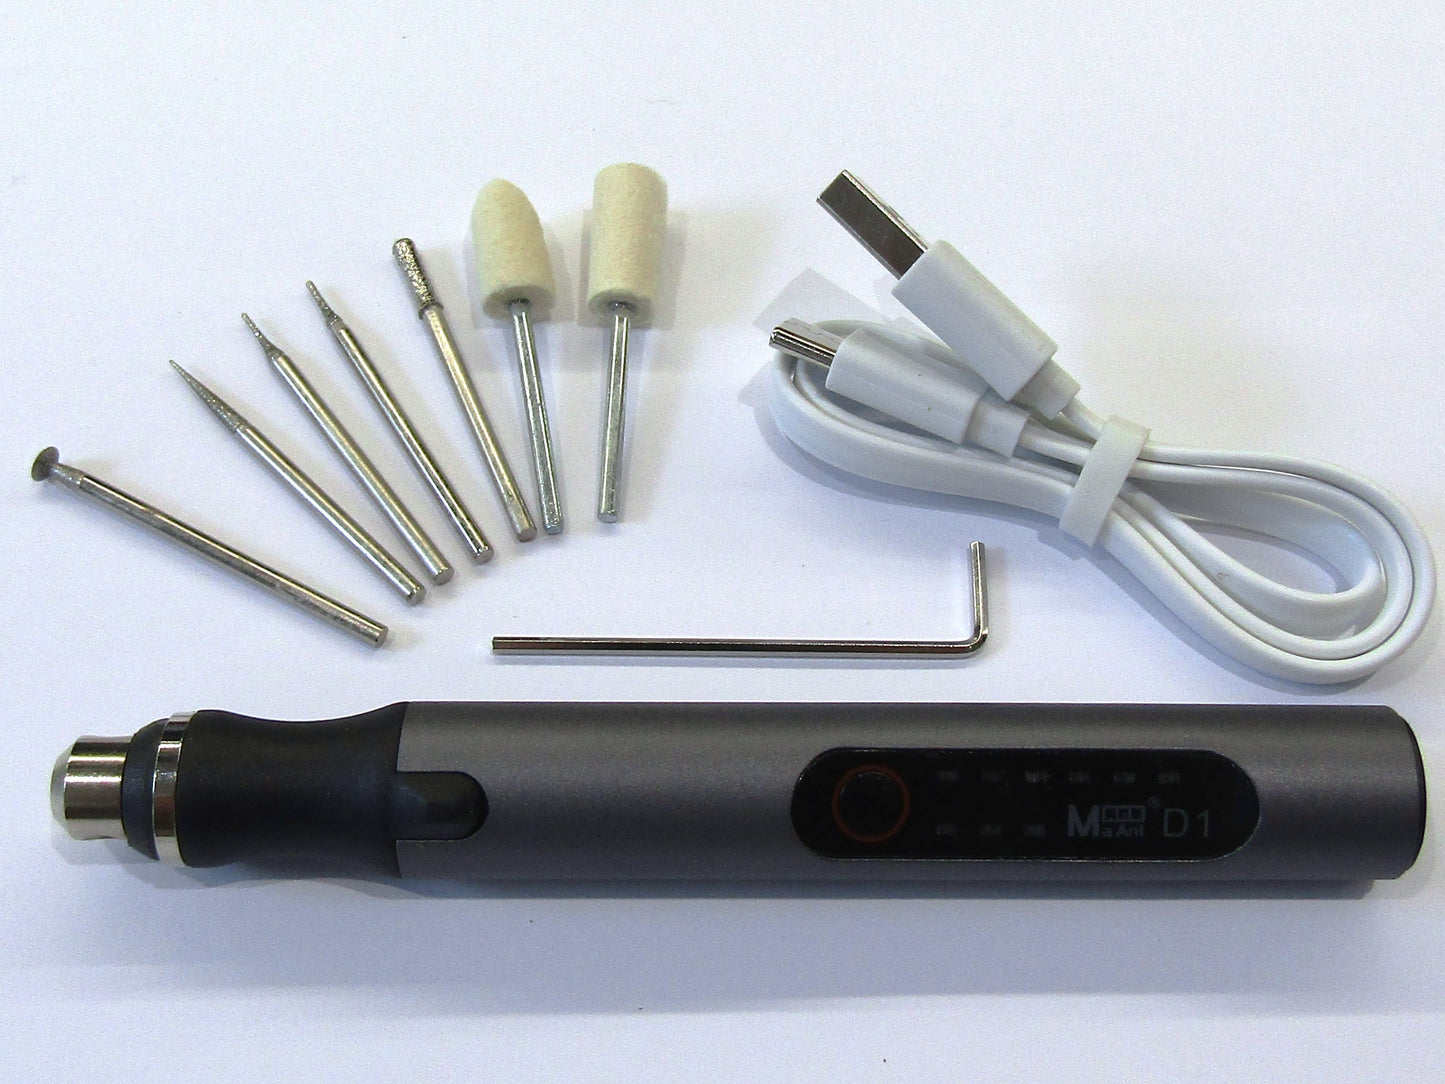 MaAnt D1 Mini PCB Schneiden - Schleifstift